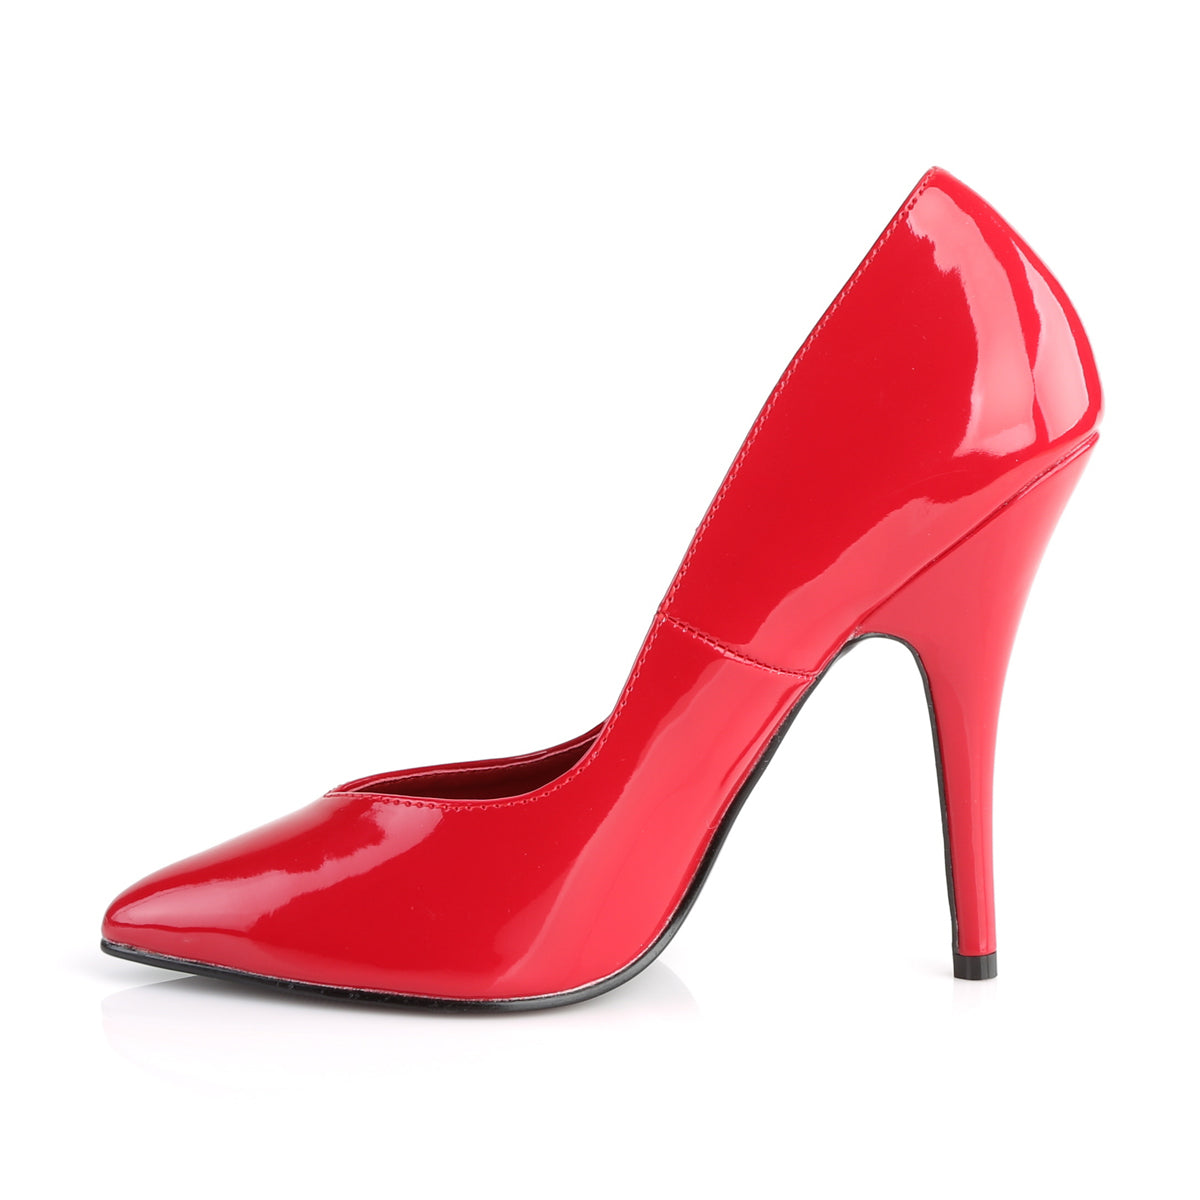 SEDUCE-420V Pleaser Sexy Shoes 5" Heel Red Fetish Footwear-Pleaser- Sexy Shoes Pole Dance Heels